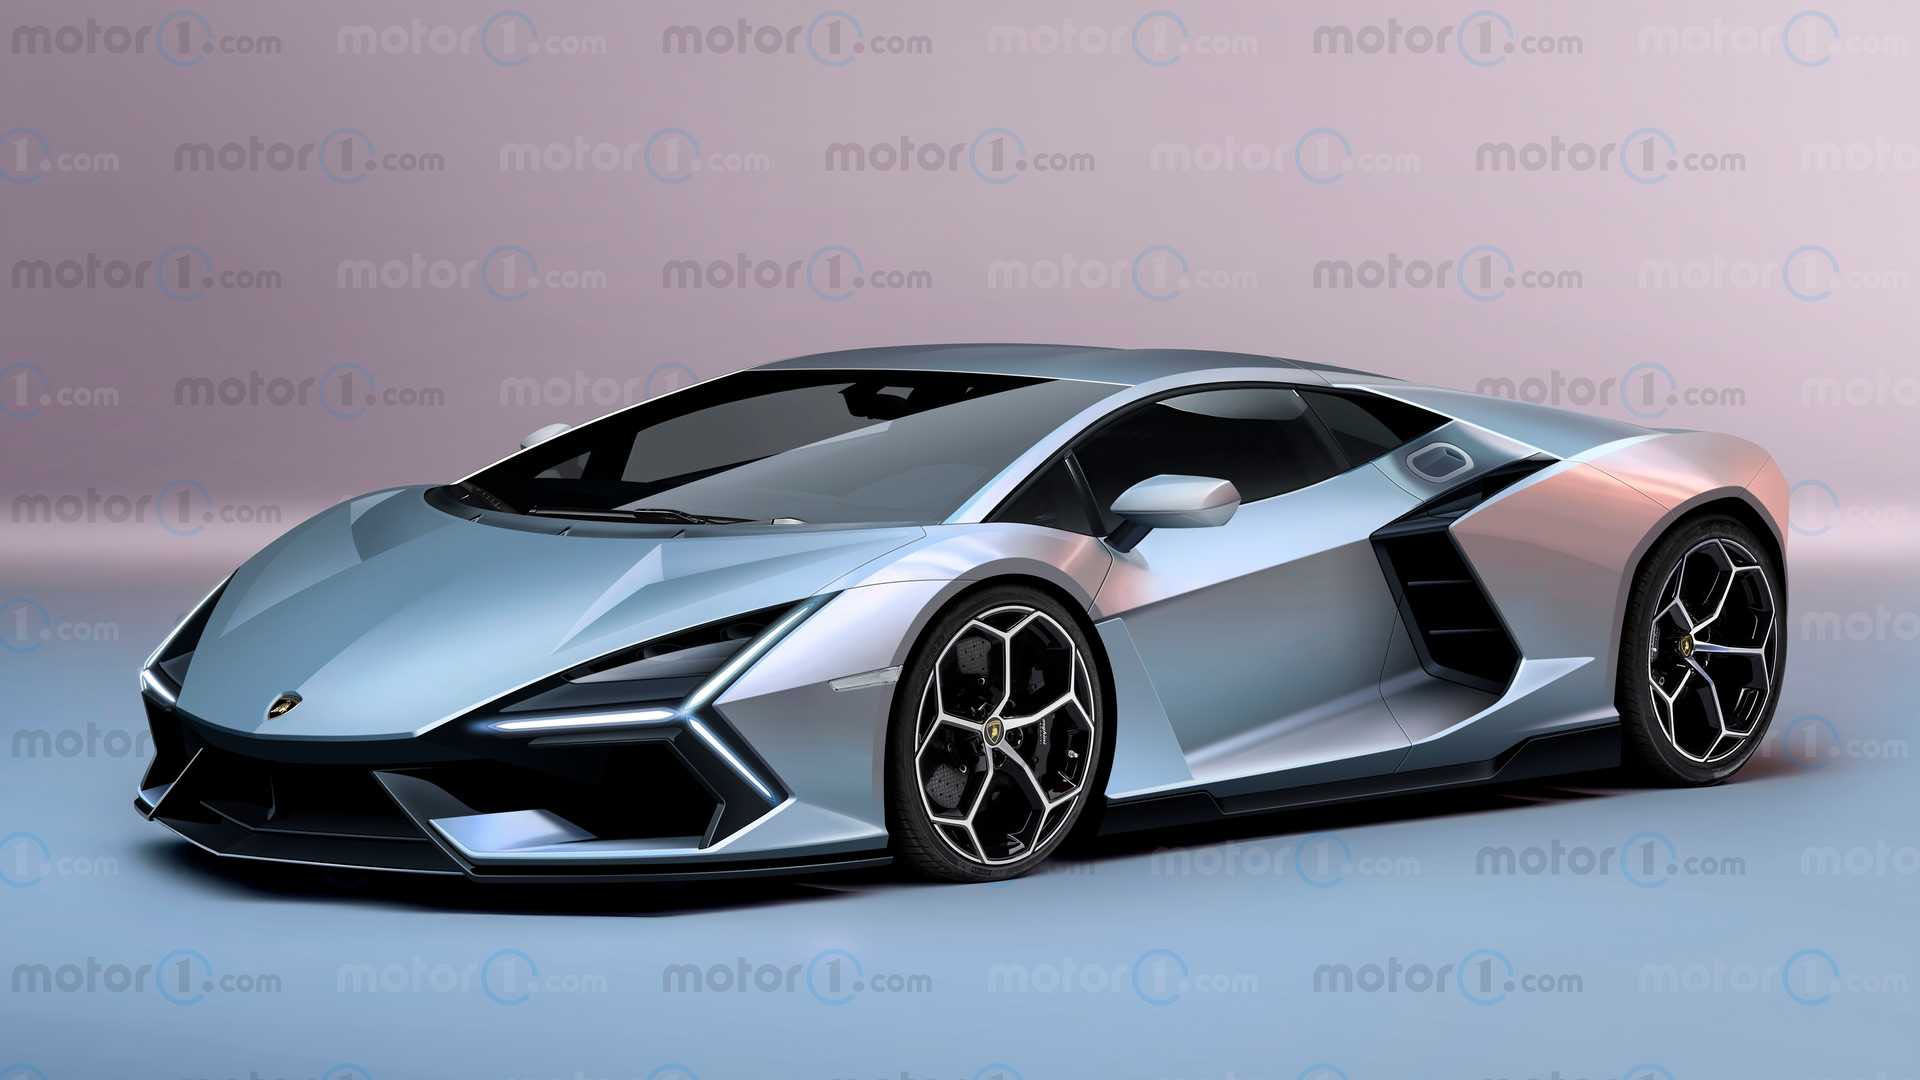 The Lamborghini Aventador successor will be unveiled soon